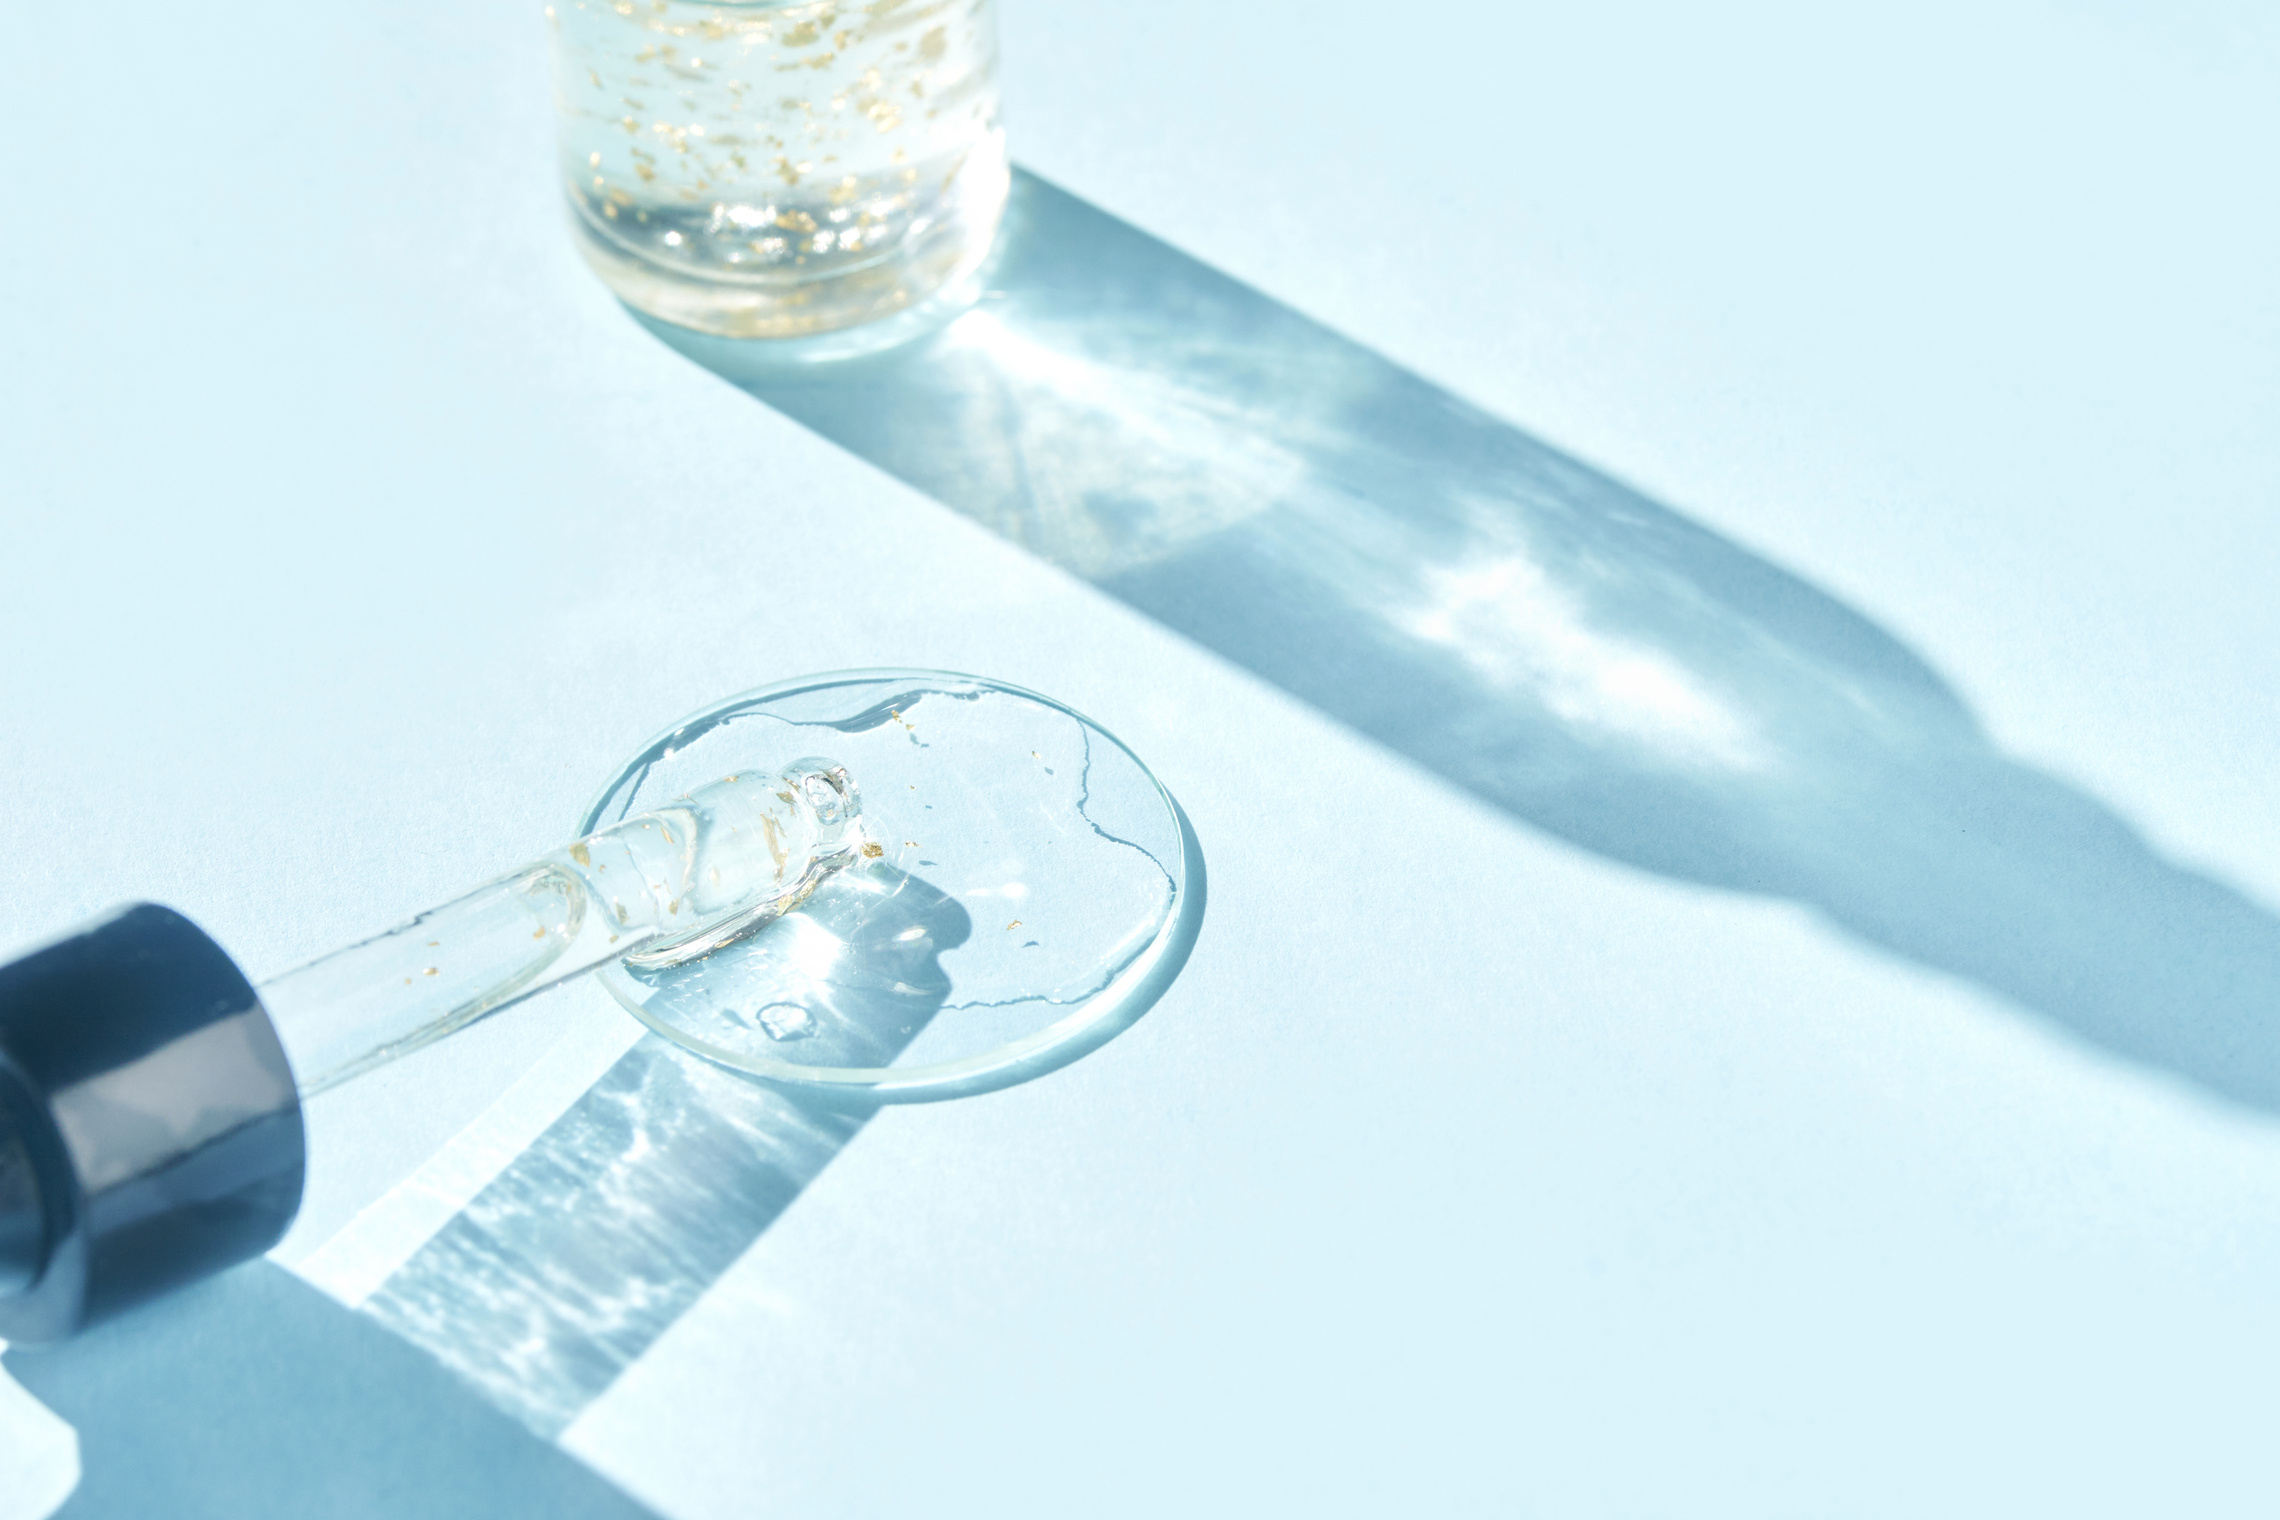 Serum gel texture swatch. Transparent drop with golden sparkles. Blue background